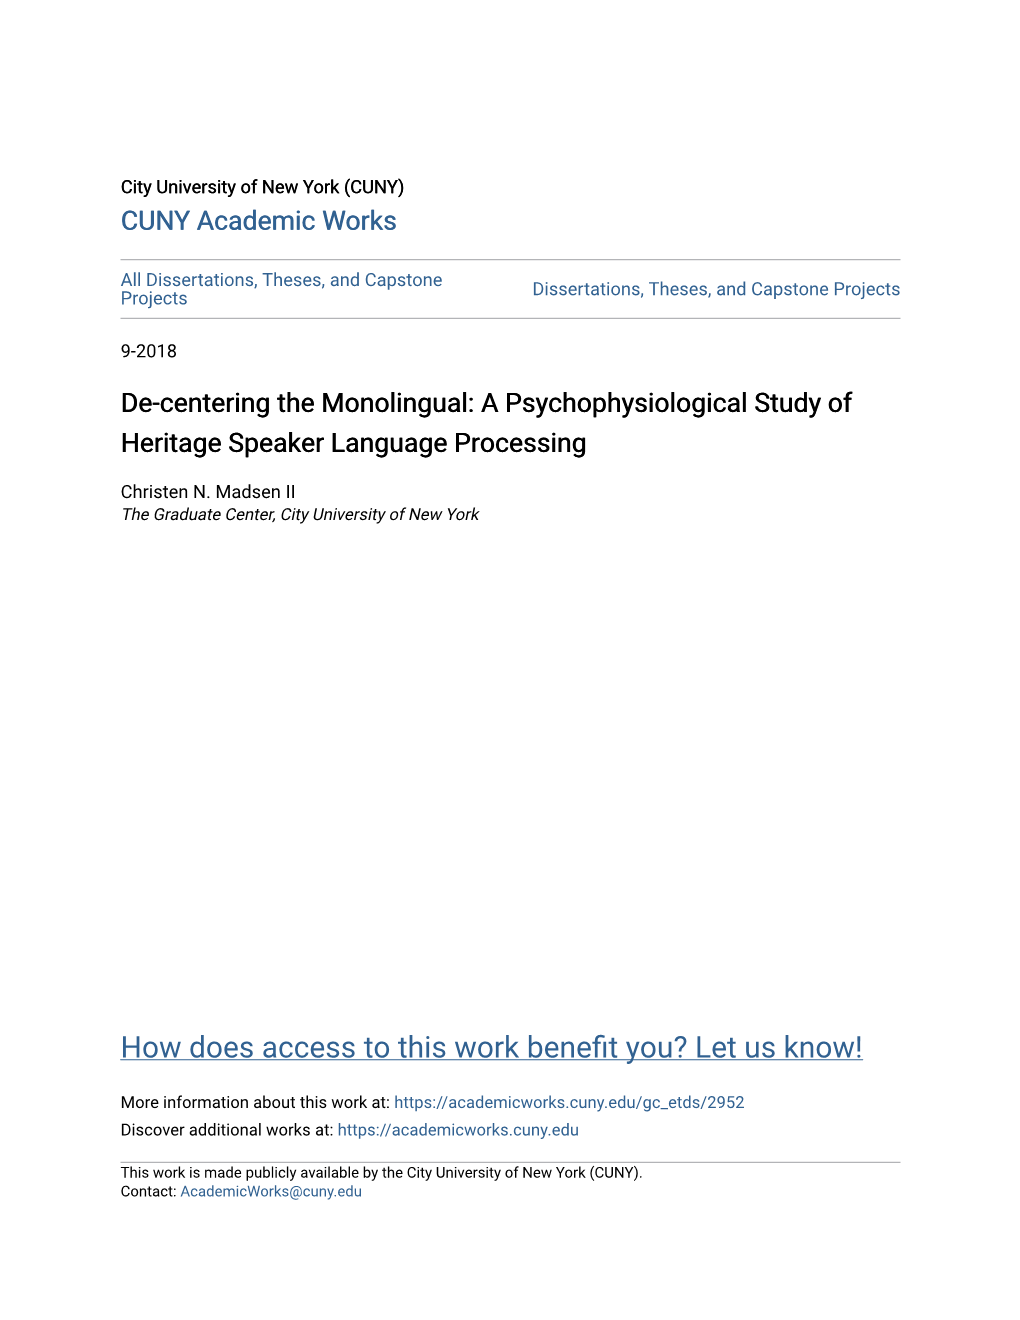 De-Centering the Monolingual: a Psychophysiological Study of Heritage Speaker Language Processing